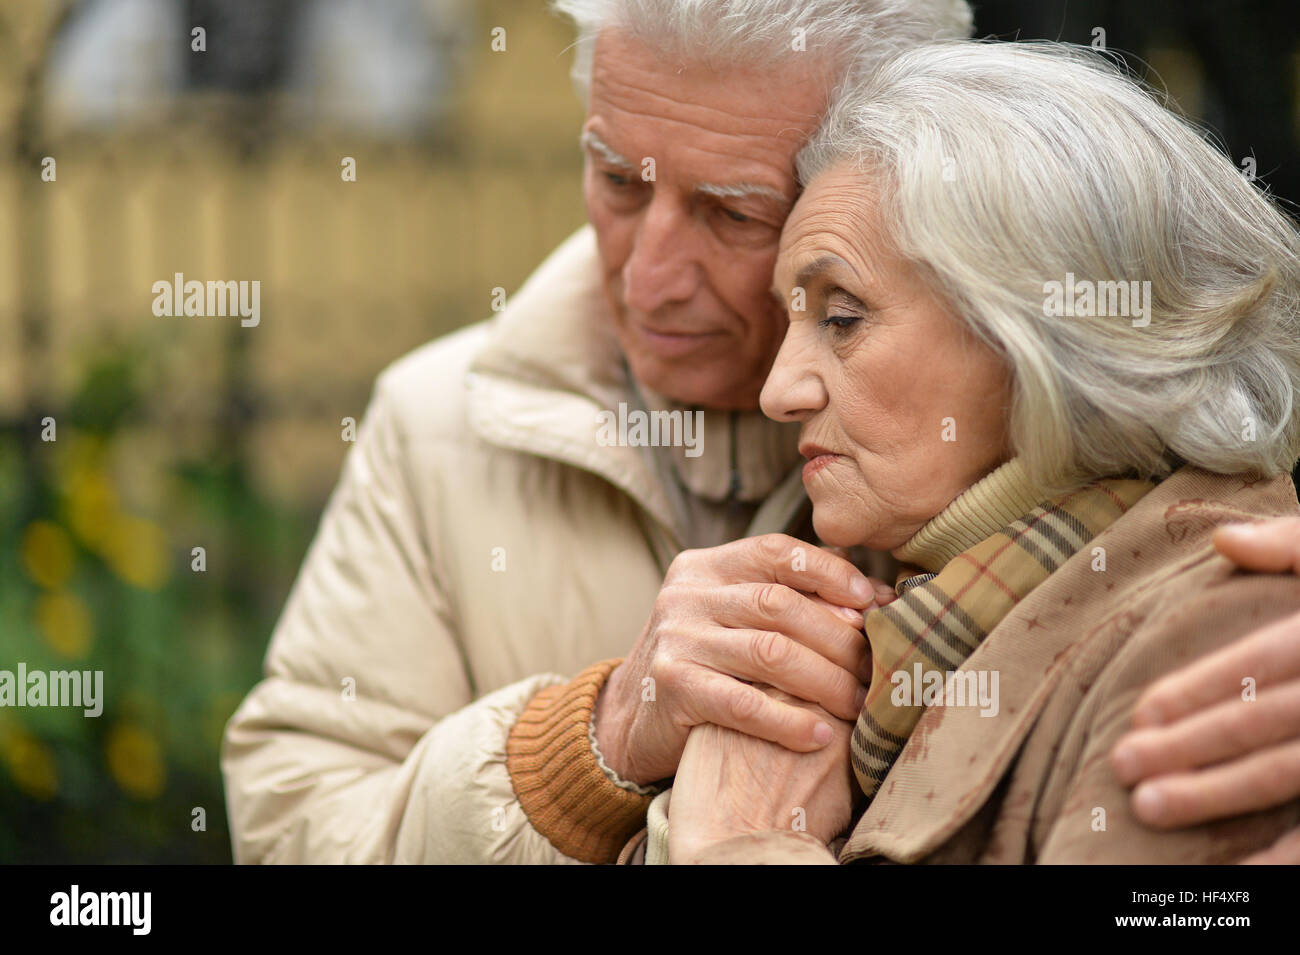 Sad elderly couple standing embracing outdoors Stock Photo